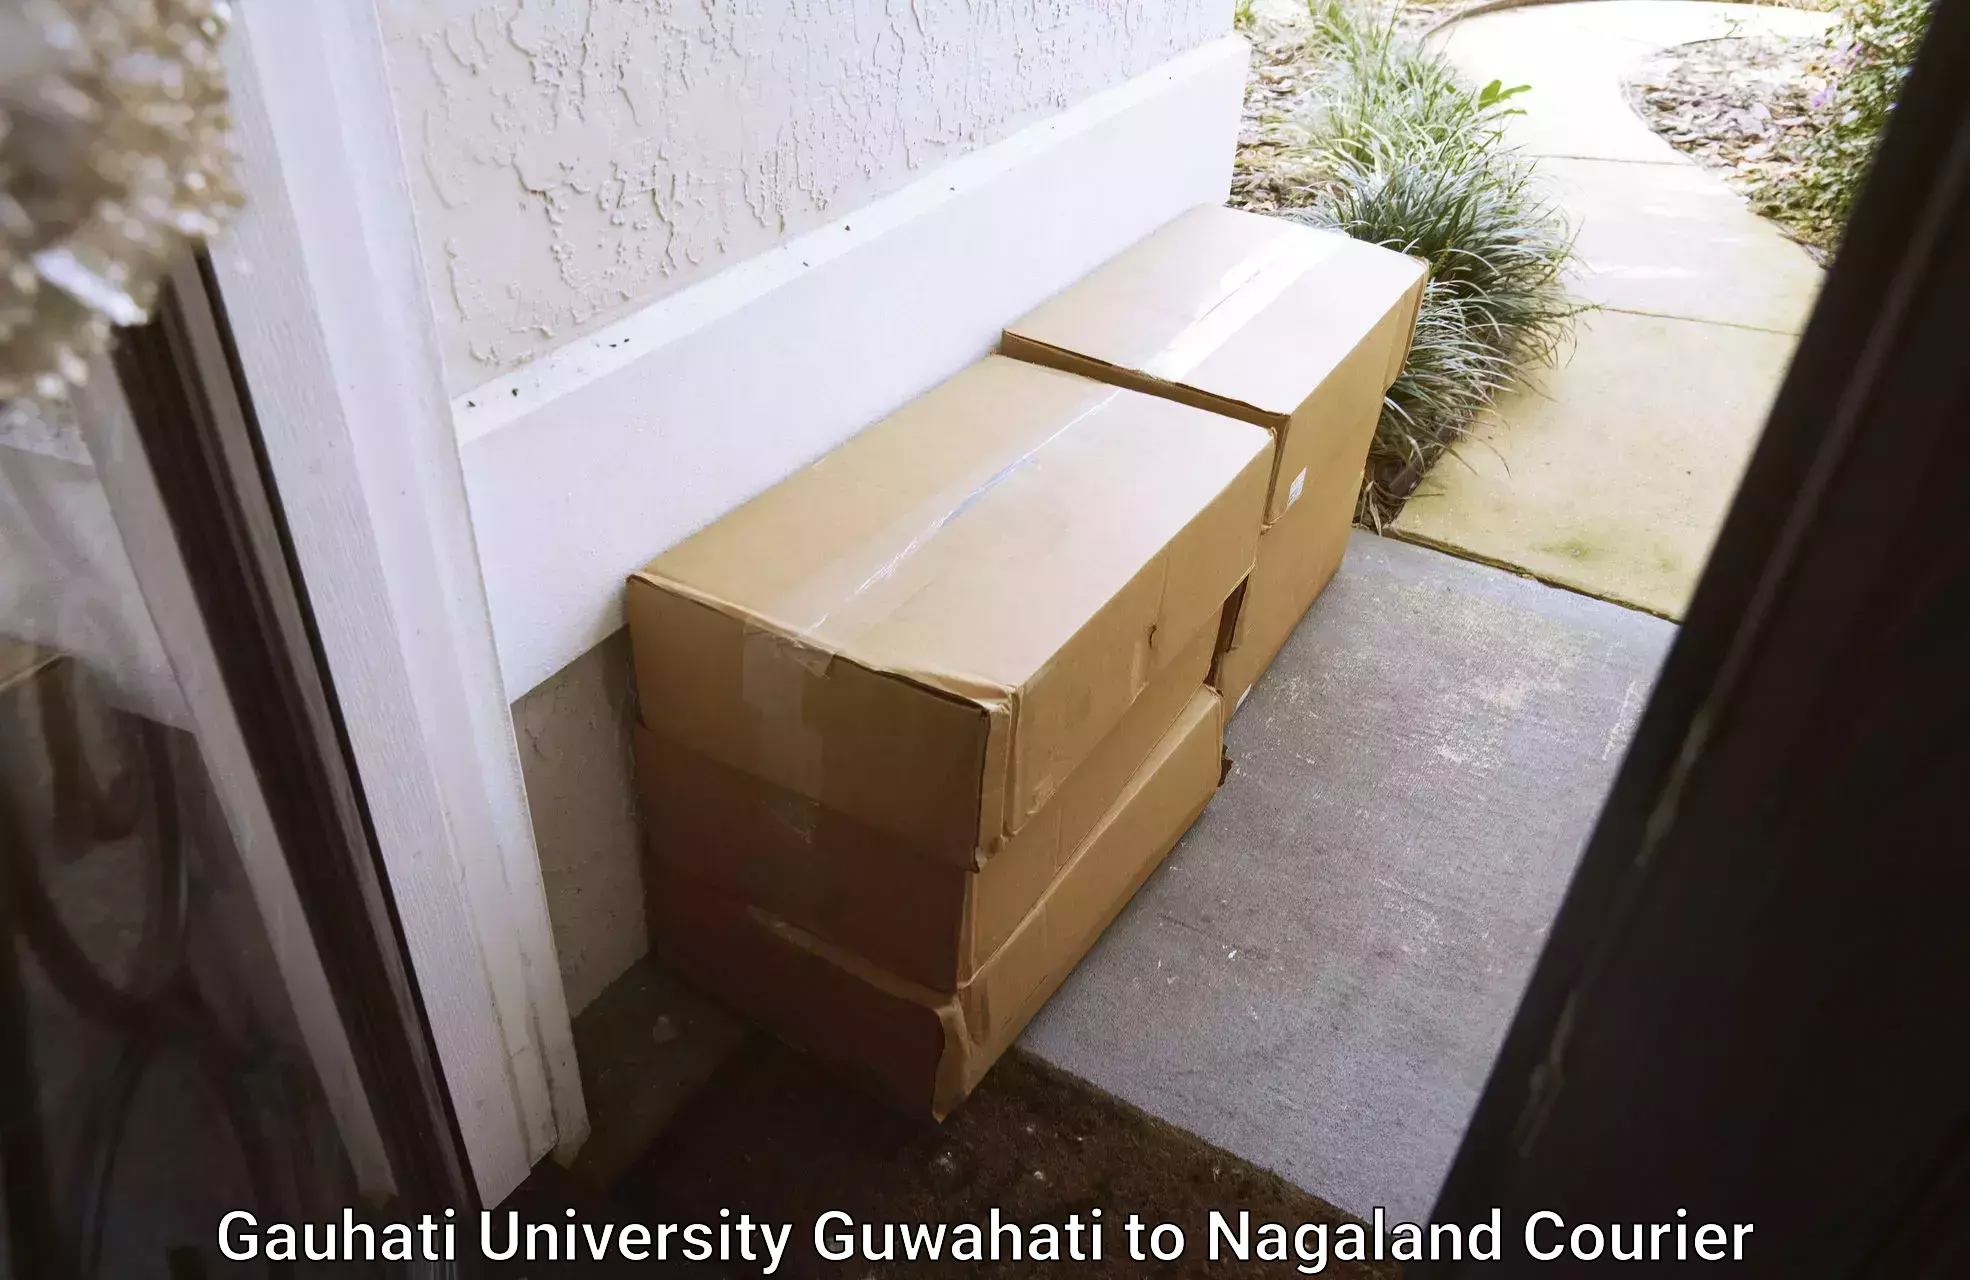 Small business couriers Gauhati University Guwahati to Kohima